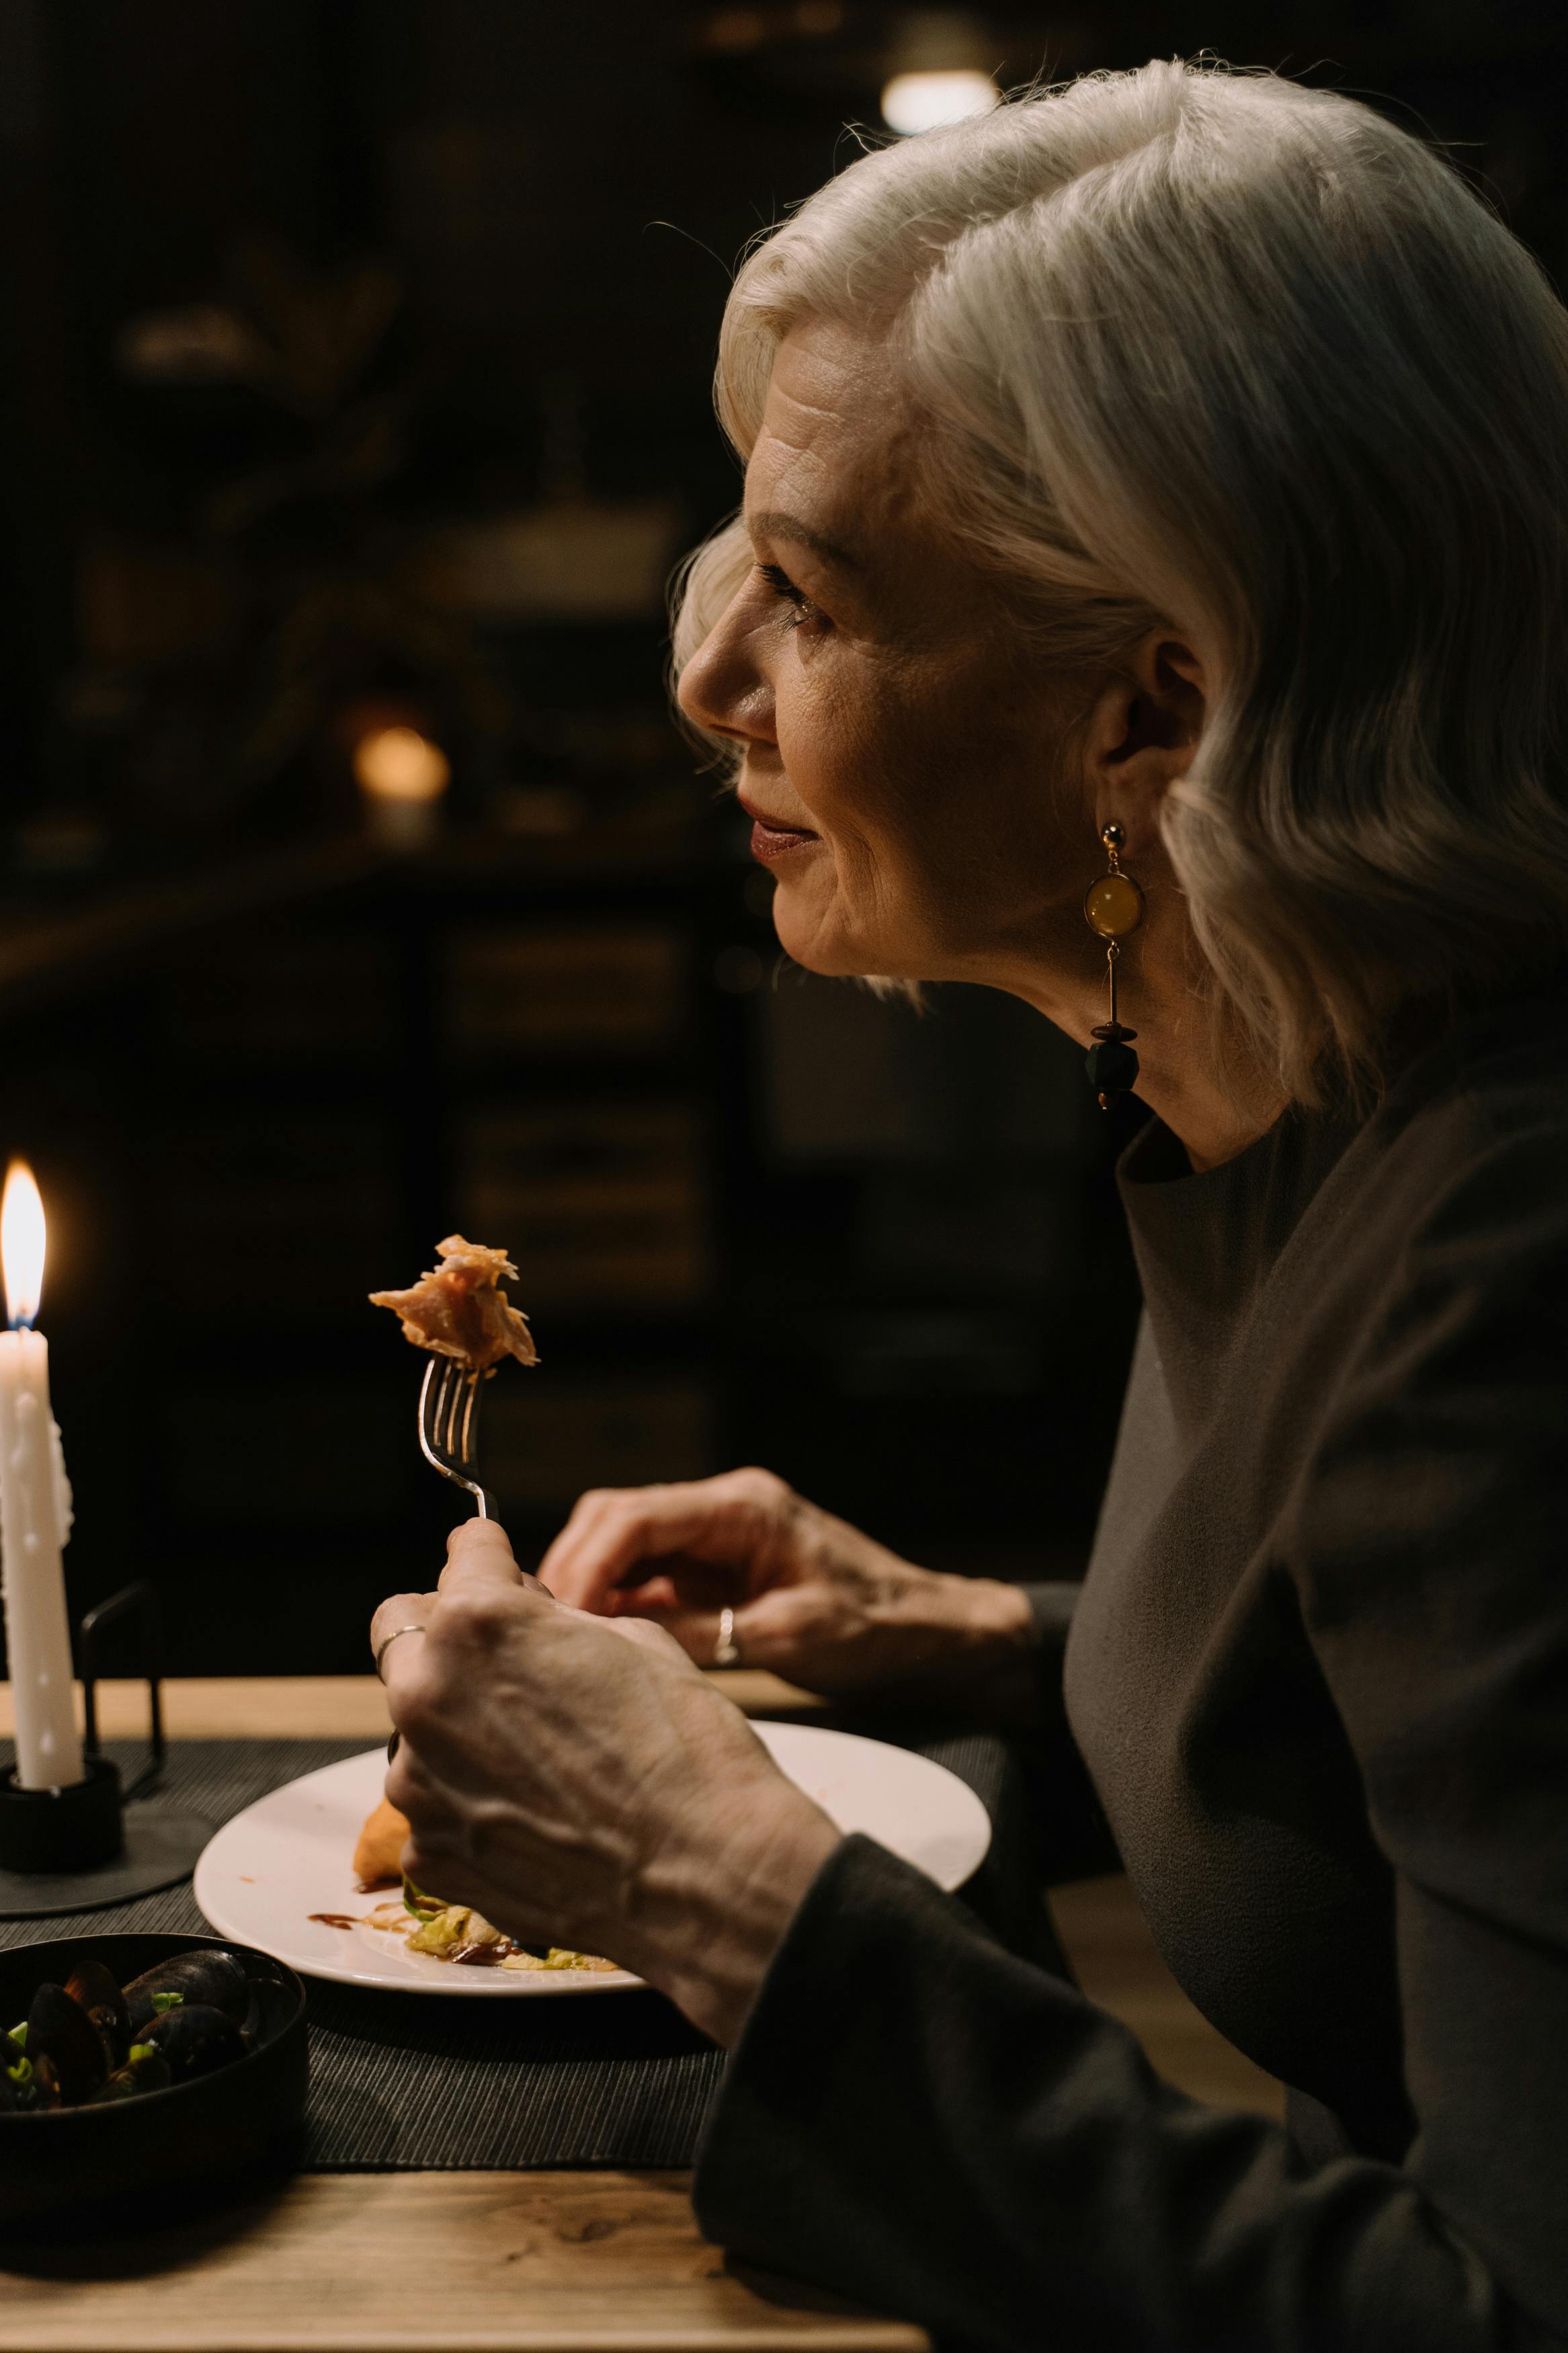 An elderly woman holding a fork | Source: Pexels